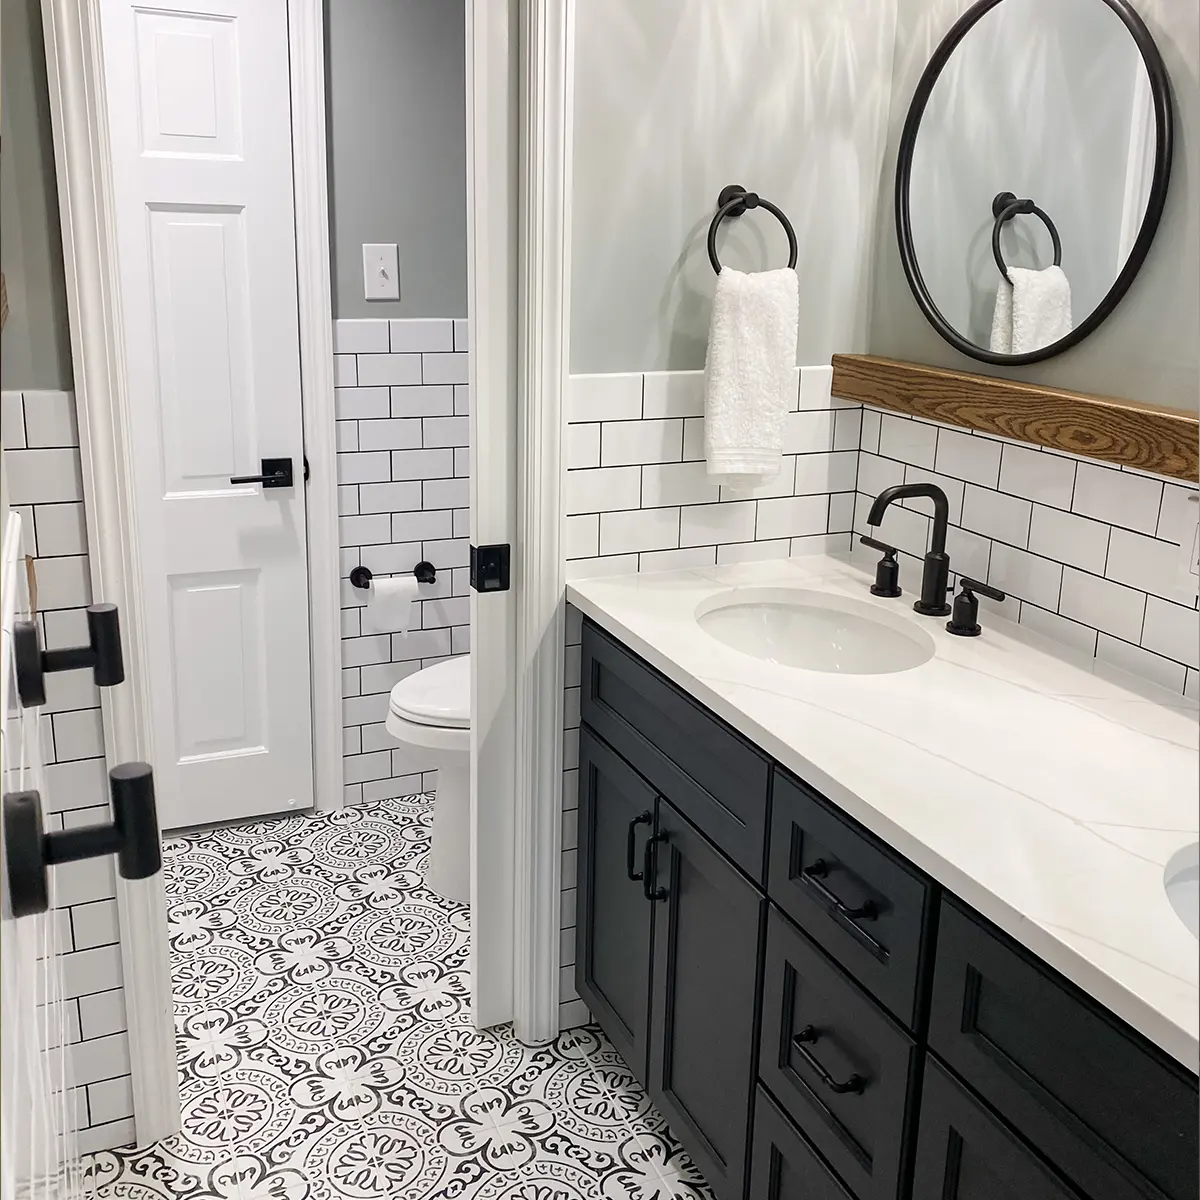 A small bathroom with beautiful tile flooring and tile backsplash